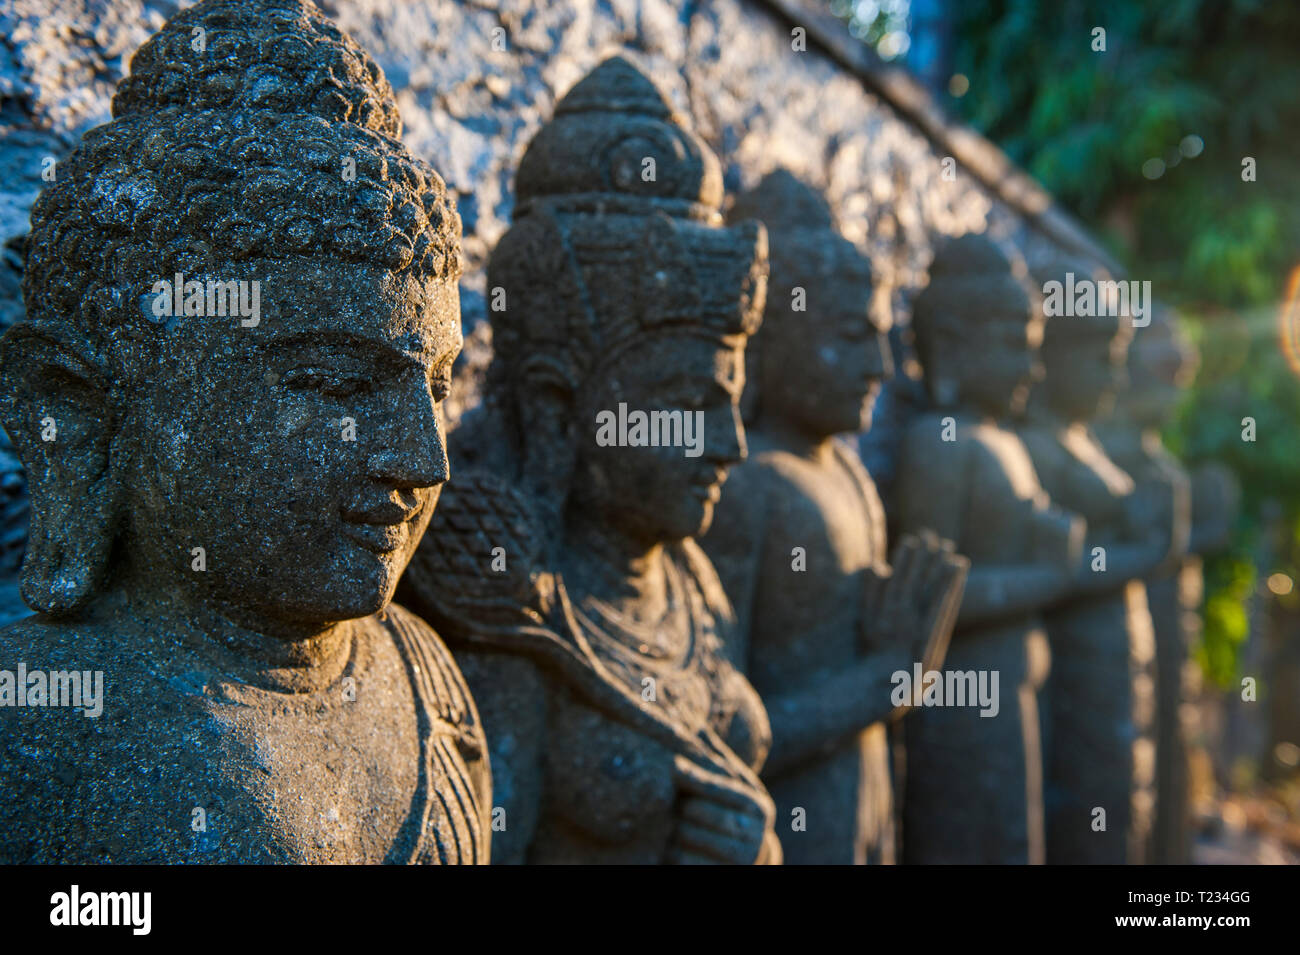 Indonesia Bali, Stone statues in the Pura Besakih temple complex Stock Photo